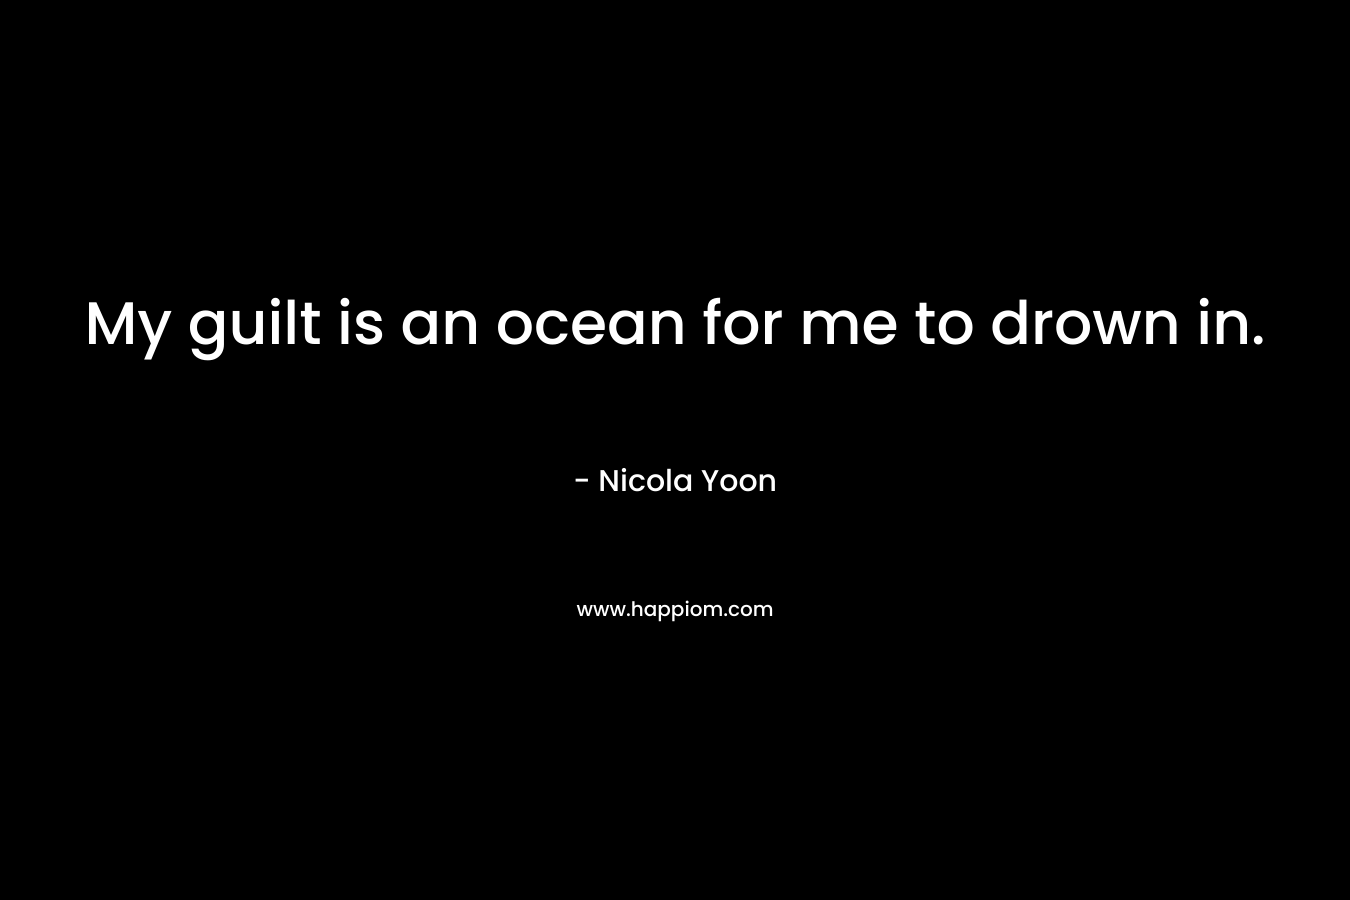 My guilt is an ocean for me to drown in. – Nicola Yoon